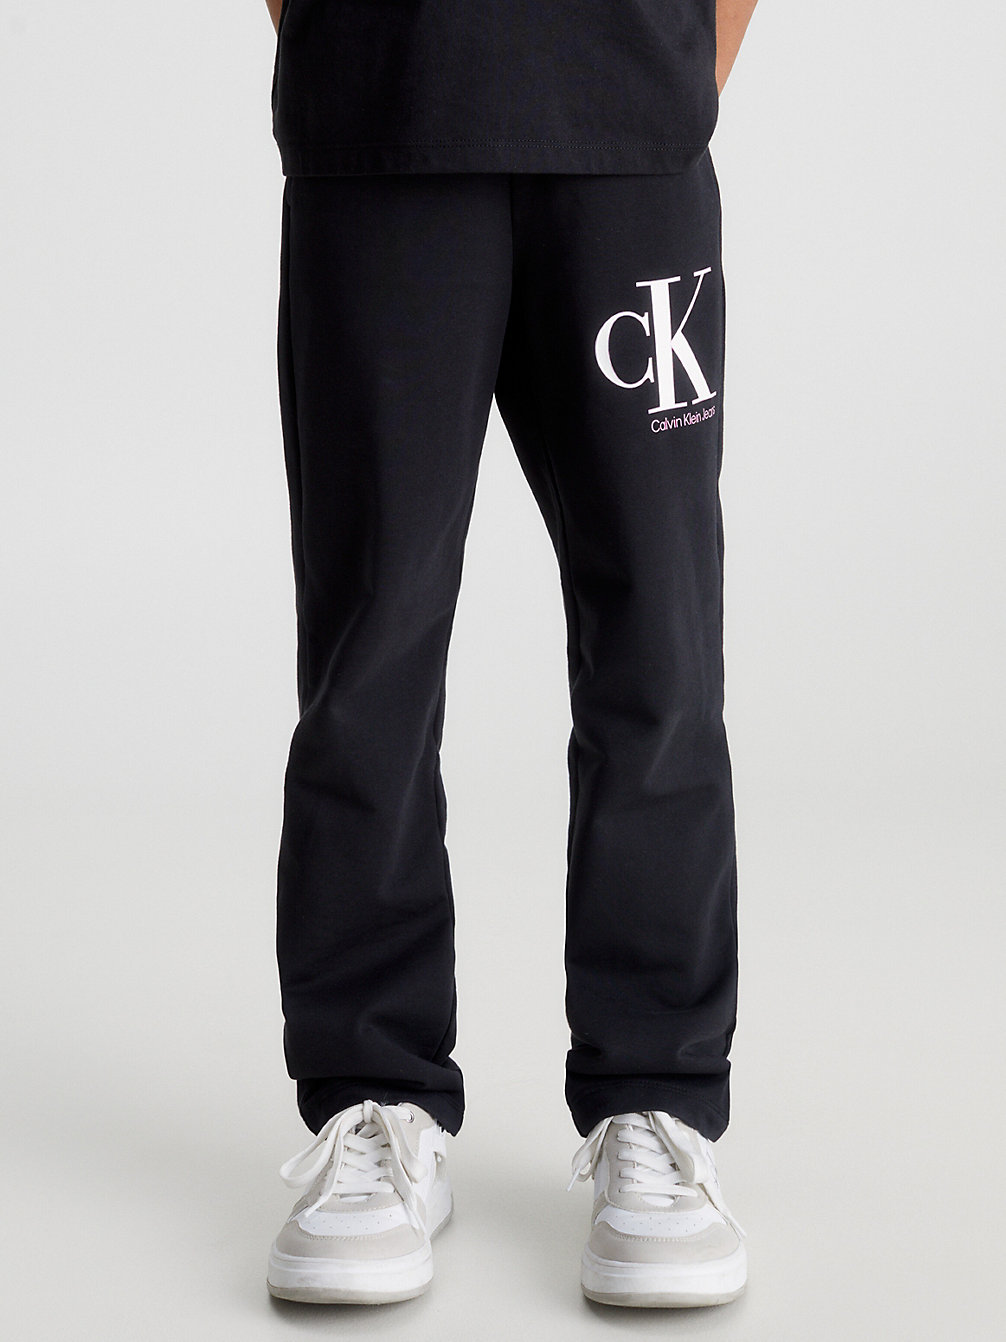 CK BLACK Colour Reveal Logo Joggers undefined girls Calvin Klein